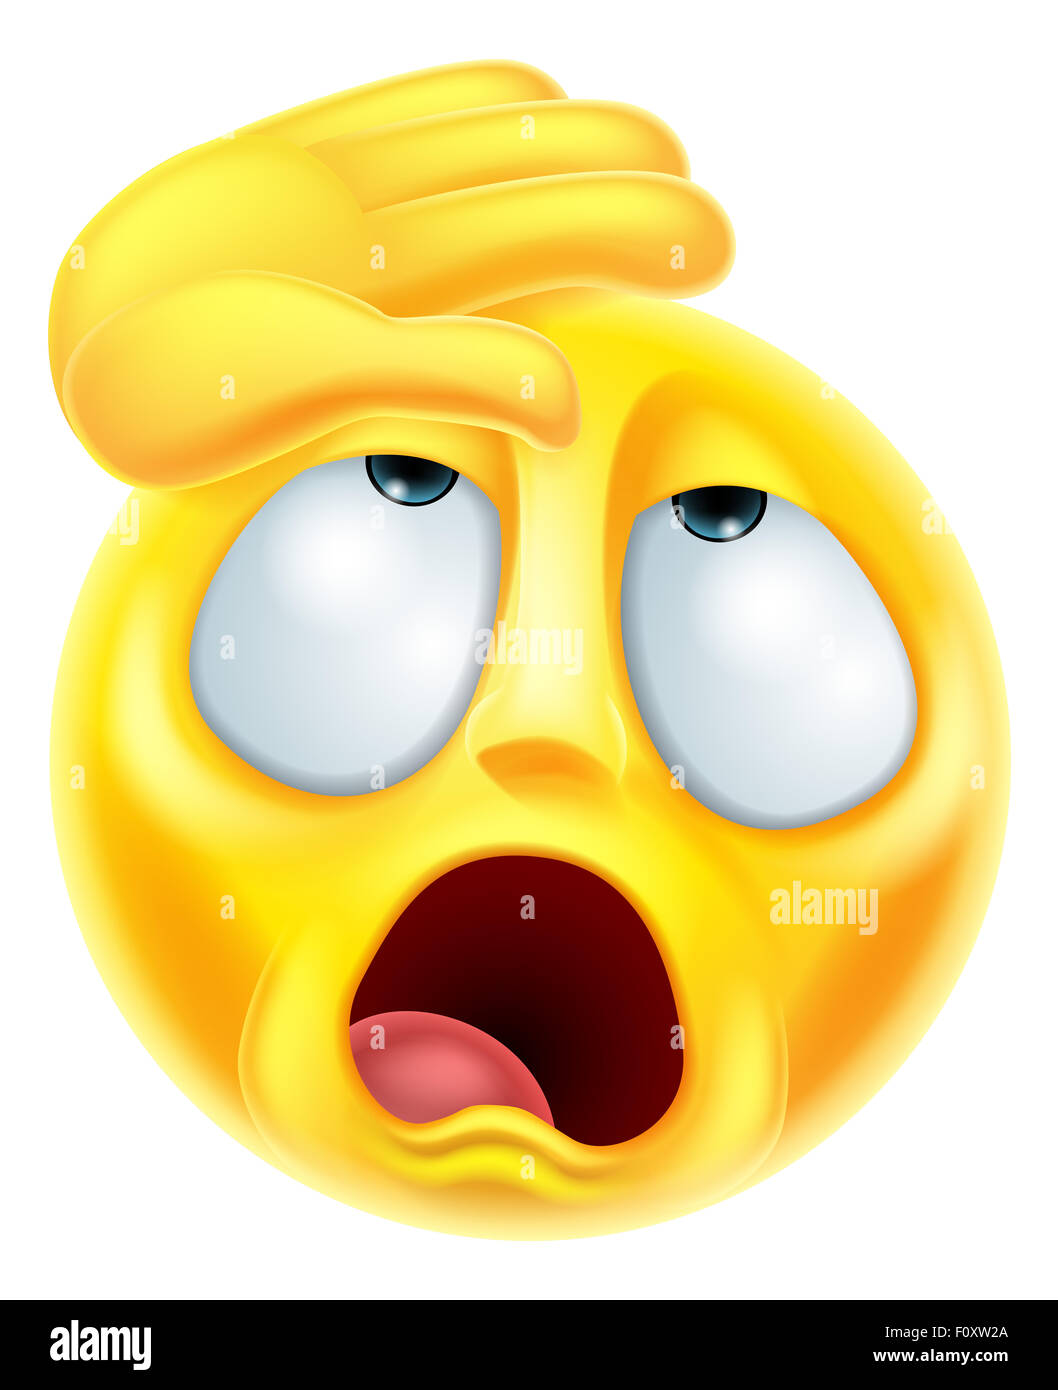 A cartoon fainting melodramatic emoji emoticon character Stock Photo